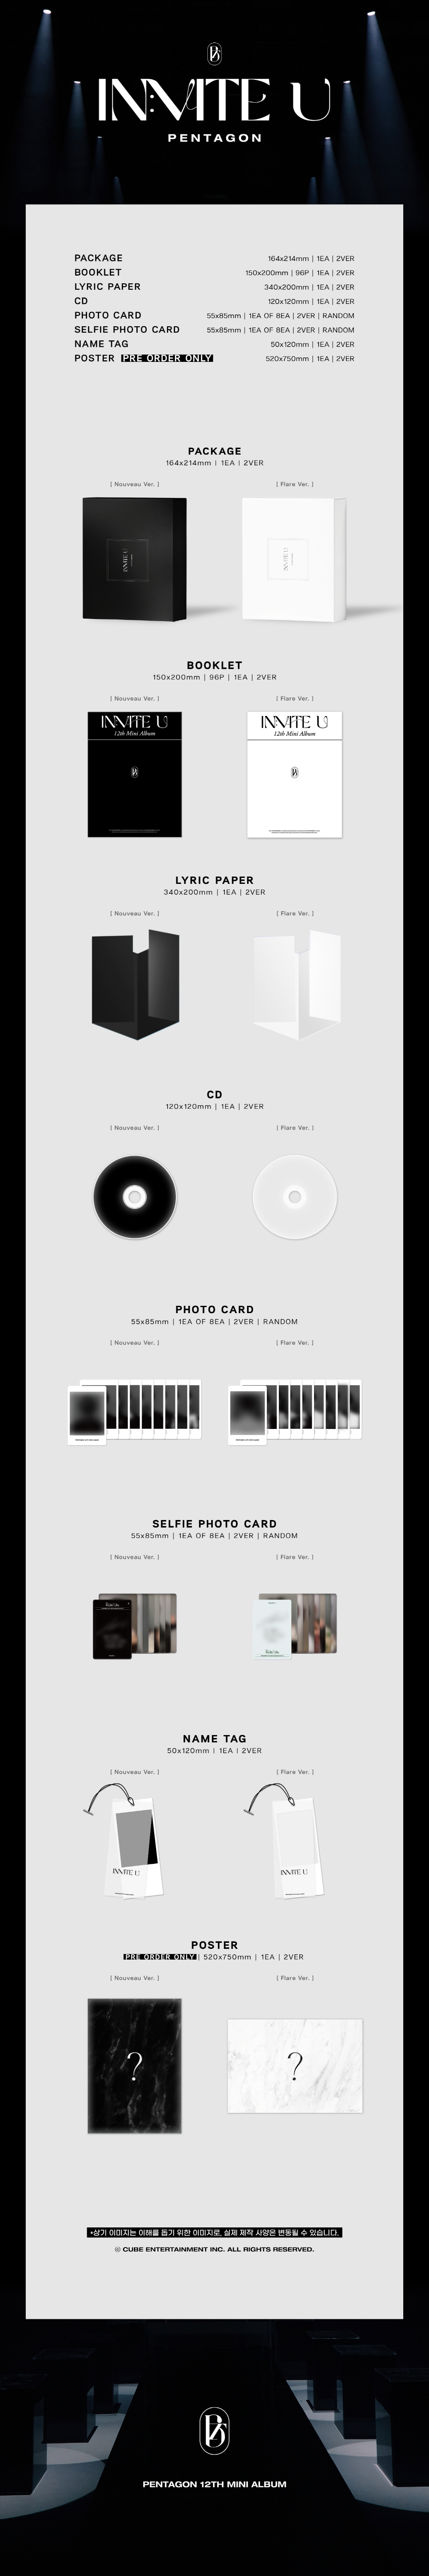 PENTAGON - 12th Mini Album [IN:VITE U] (Nouveau+Flare Ver.set) PENTAGON PENTAGONalbum IN:VITE U PENTAGONIN:VITE U CD album photobook photocard kpop